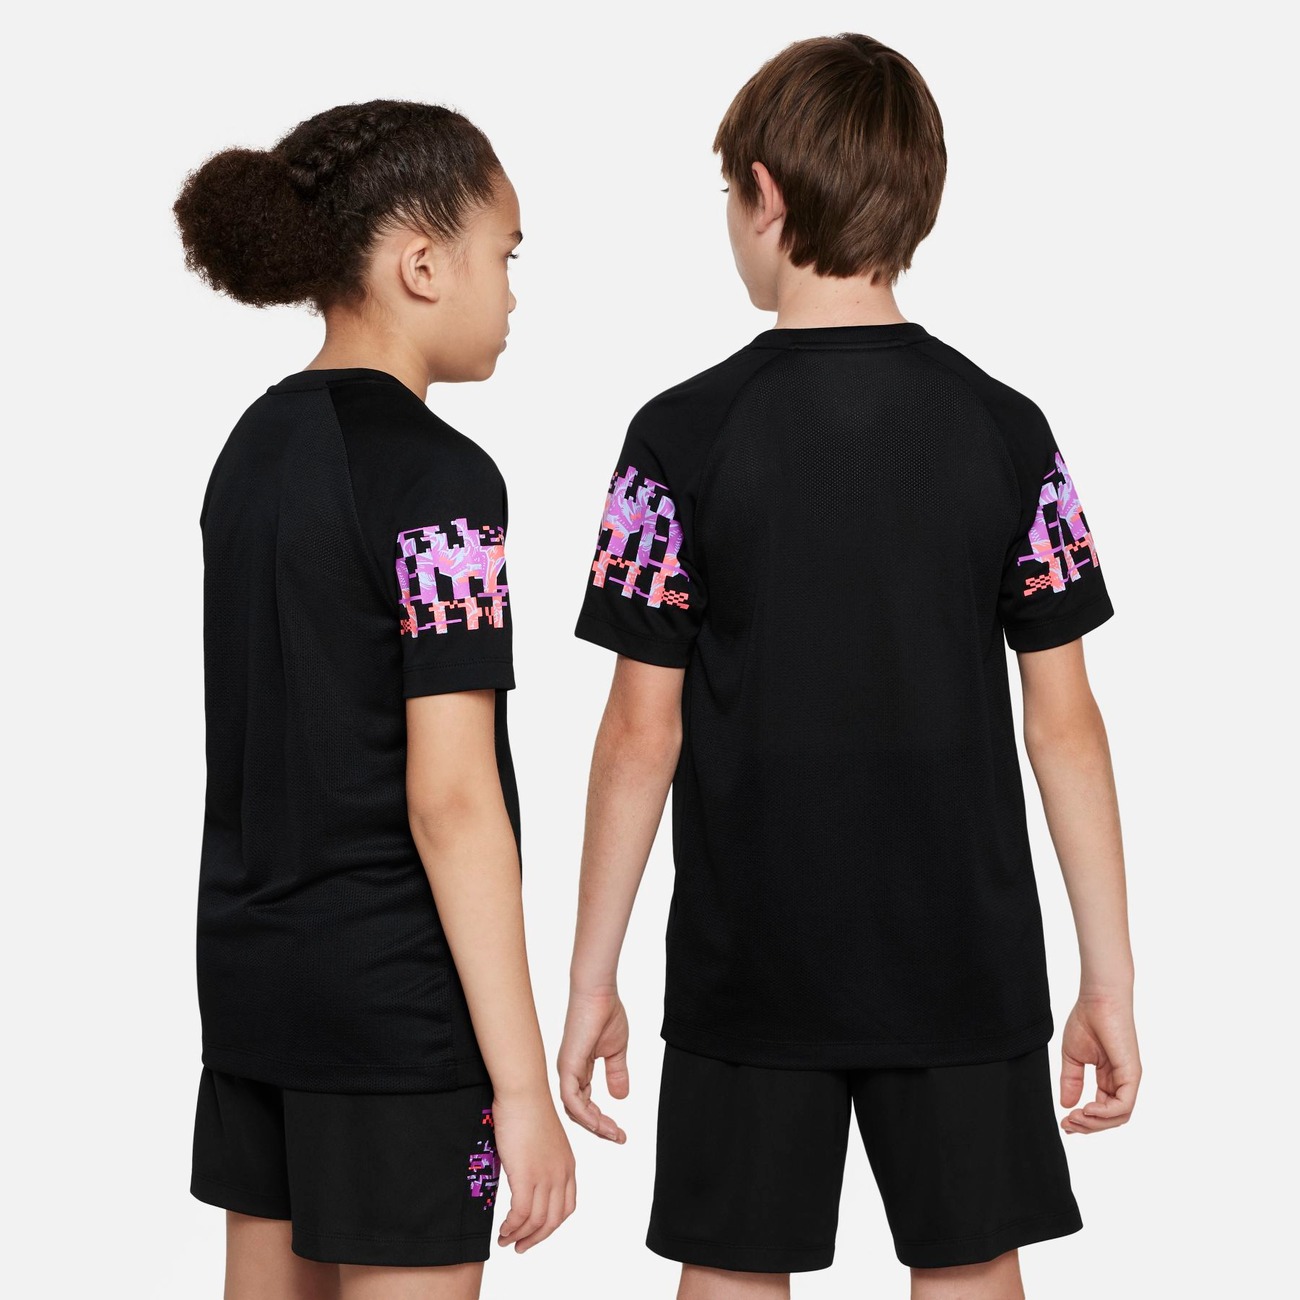 Camiseta Nike Infantil Boys CR7 Dry Top - GG : : Moda